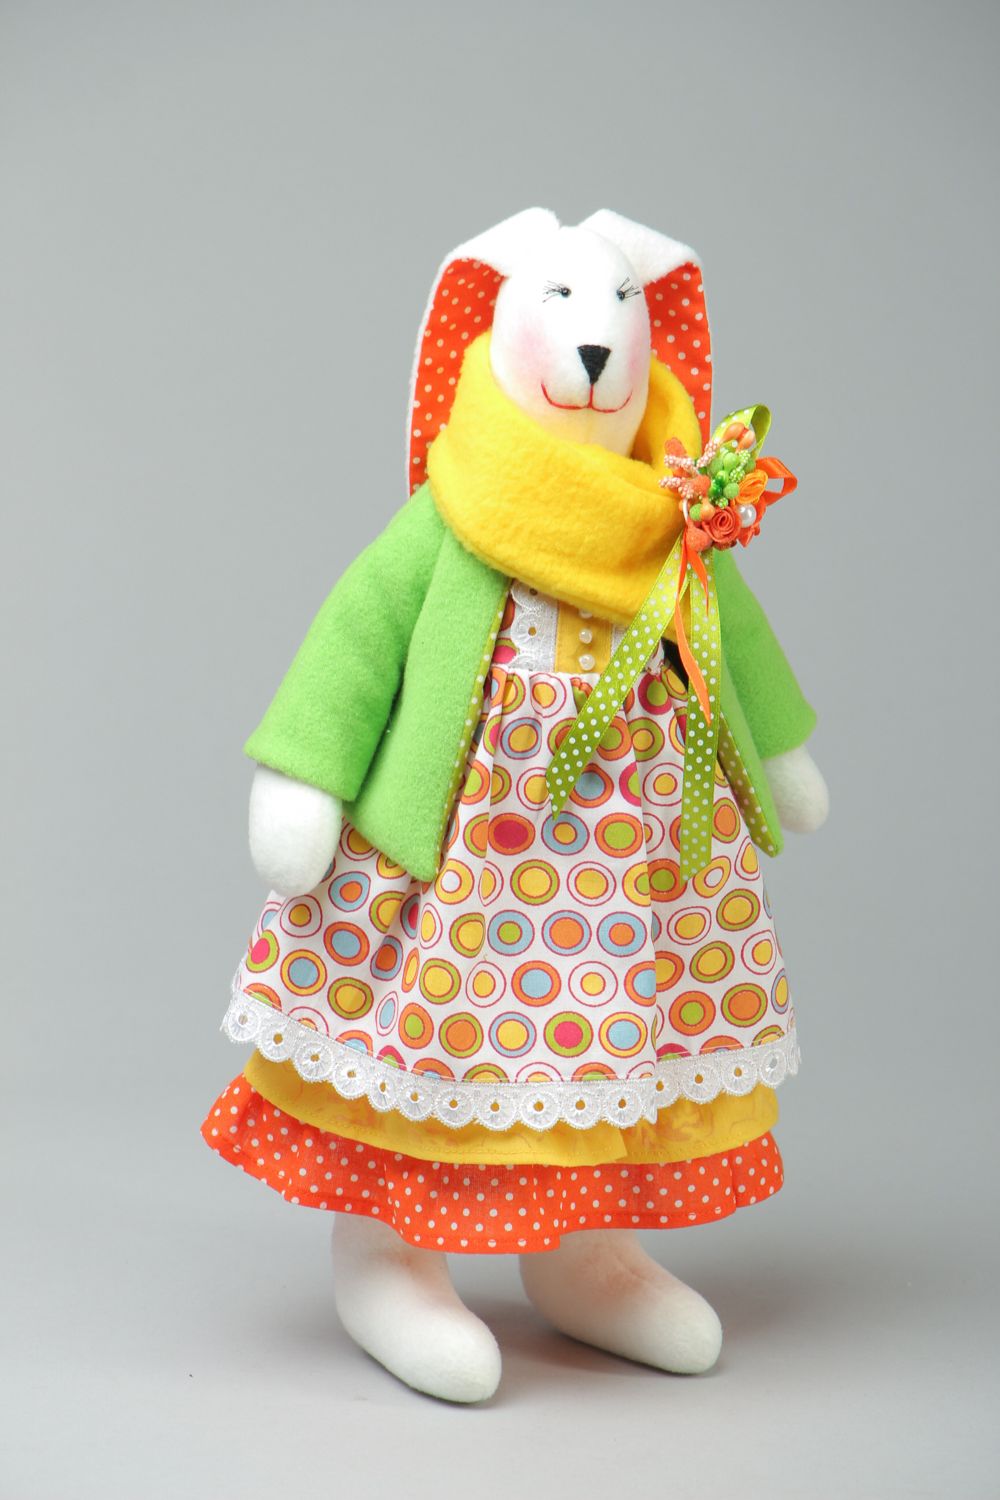 Fabric toy rabbit in dress photo 1